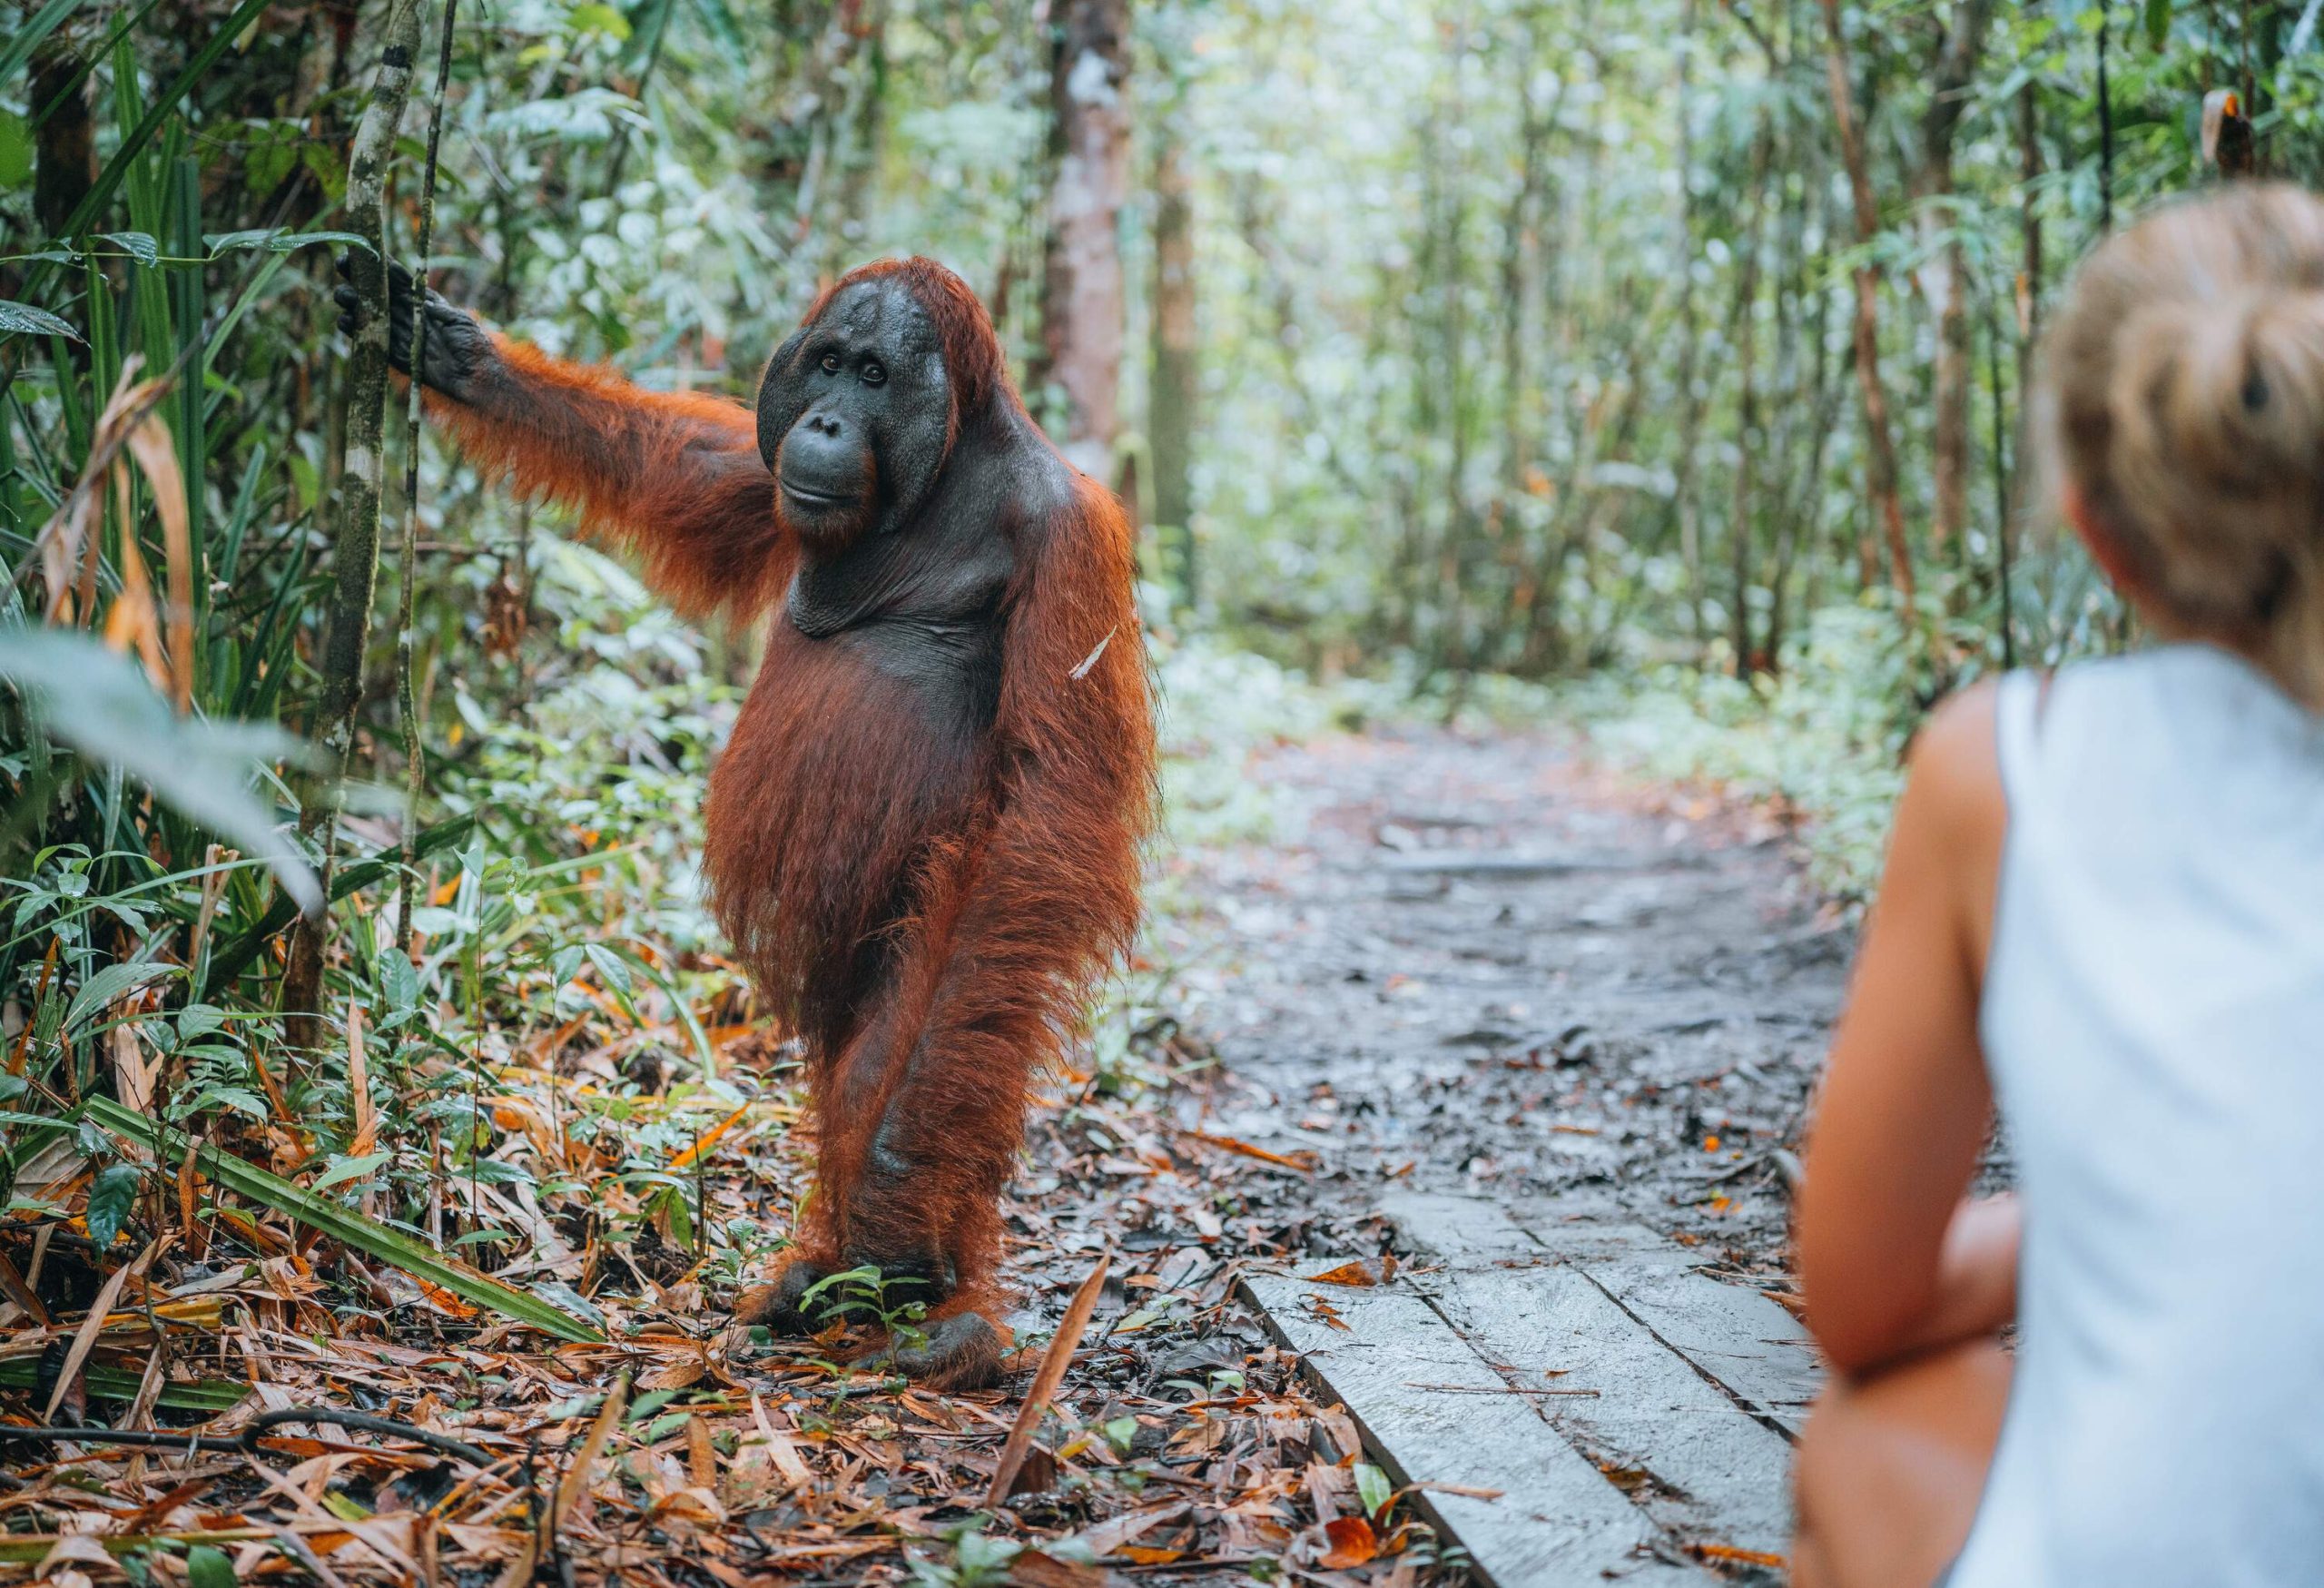 A woman sits next to an orange orangutan in a jungle.